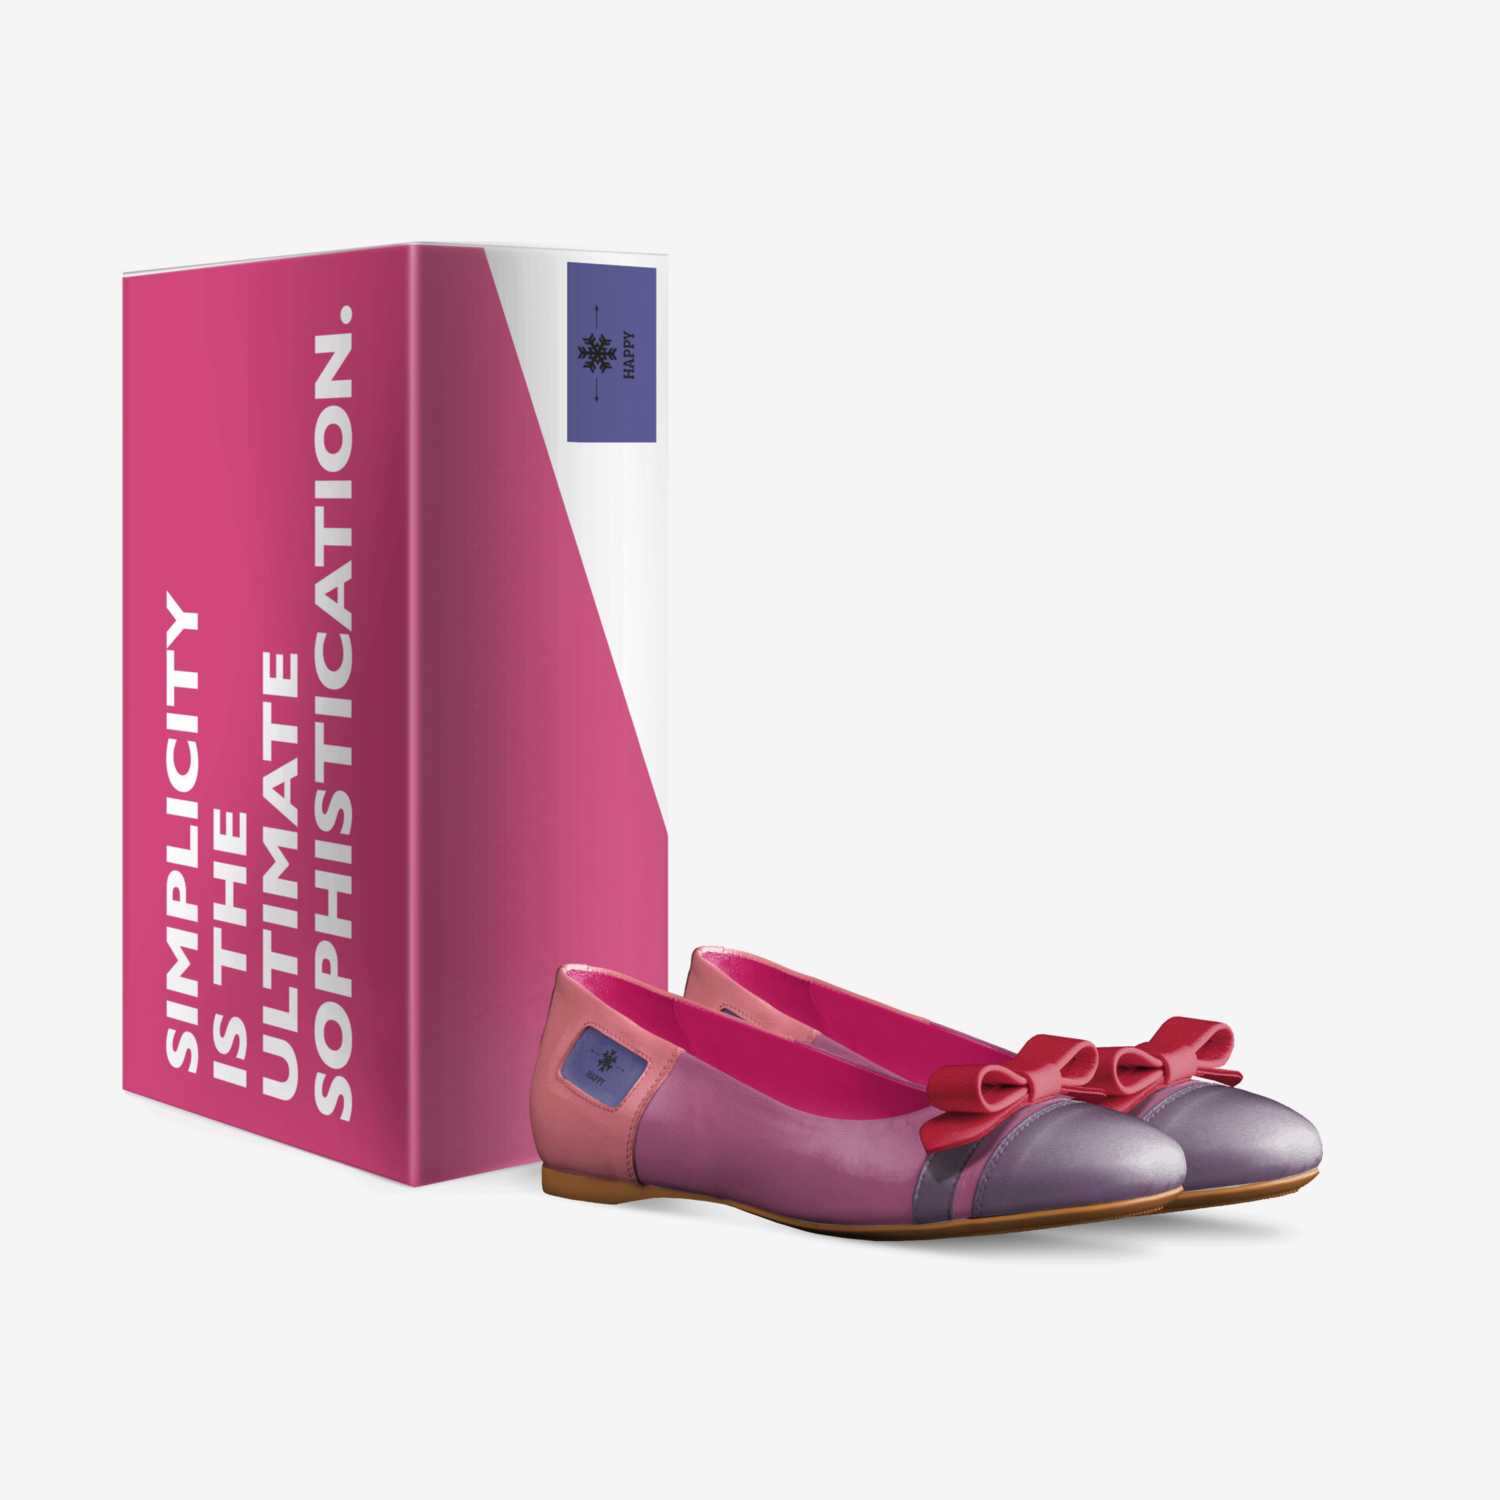 Happy custom made in Italy shoes by Natalya Charkviani | Box view